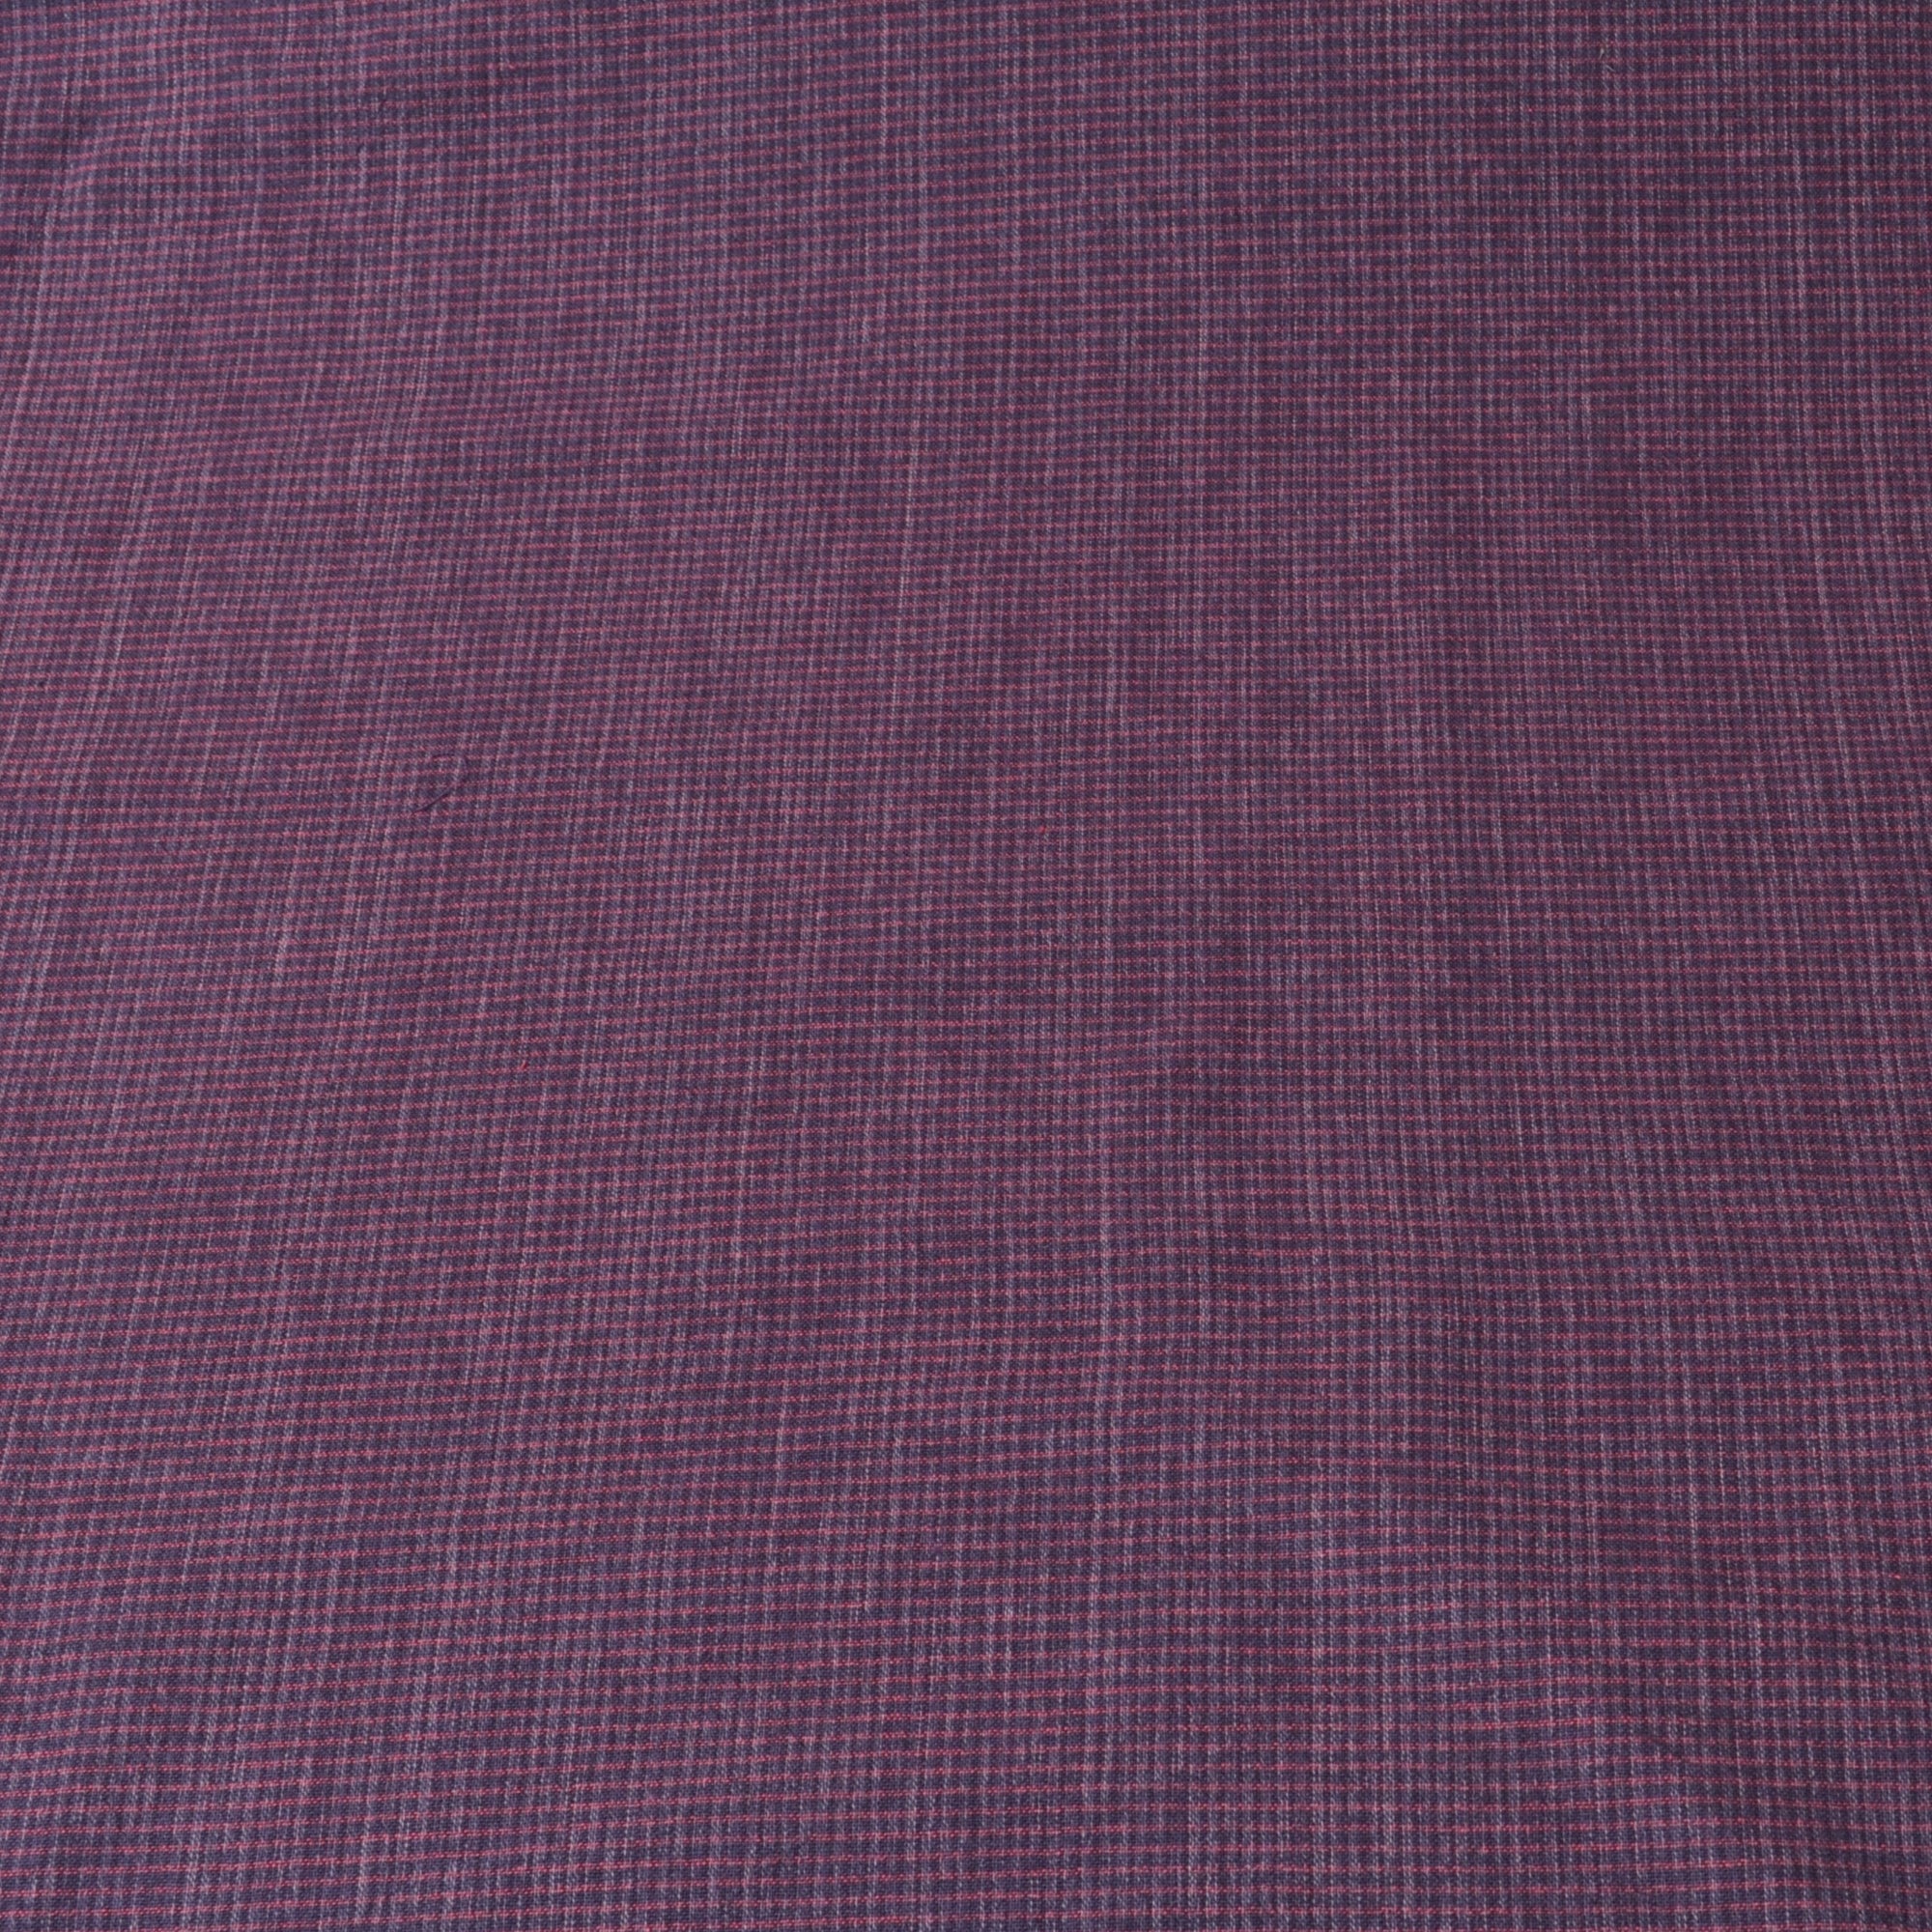 Yarn dyed cotton fabric